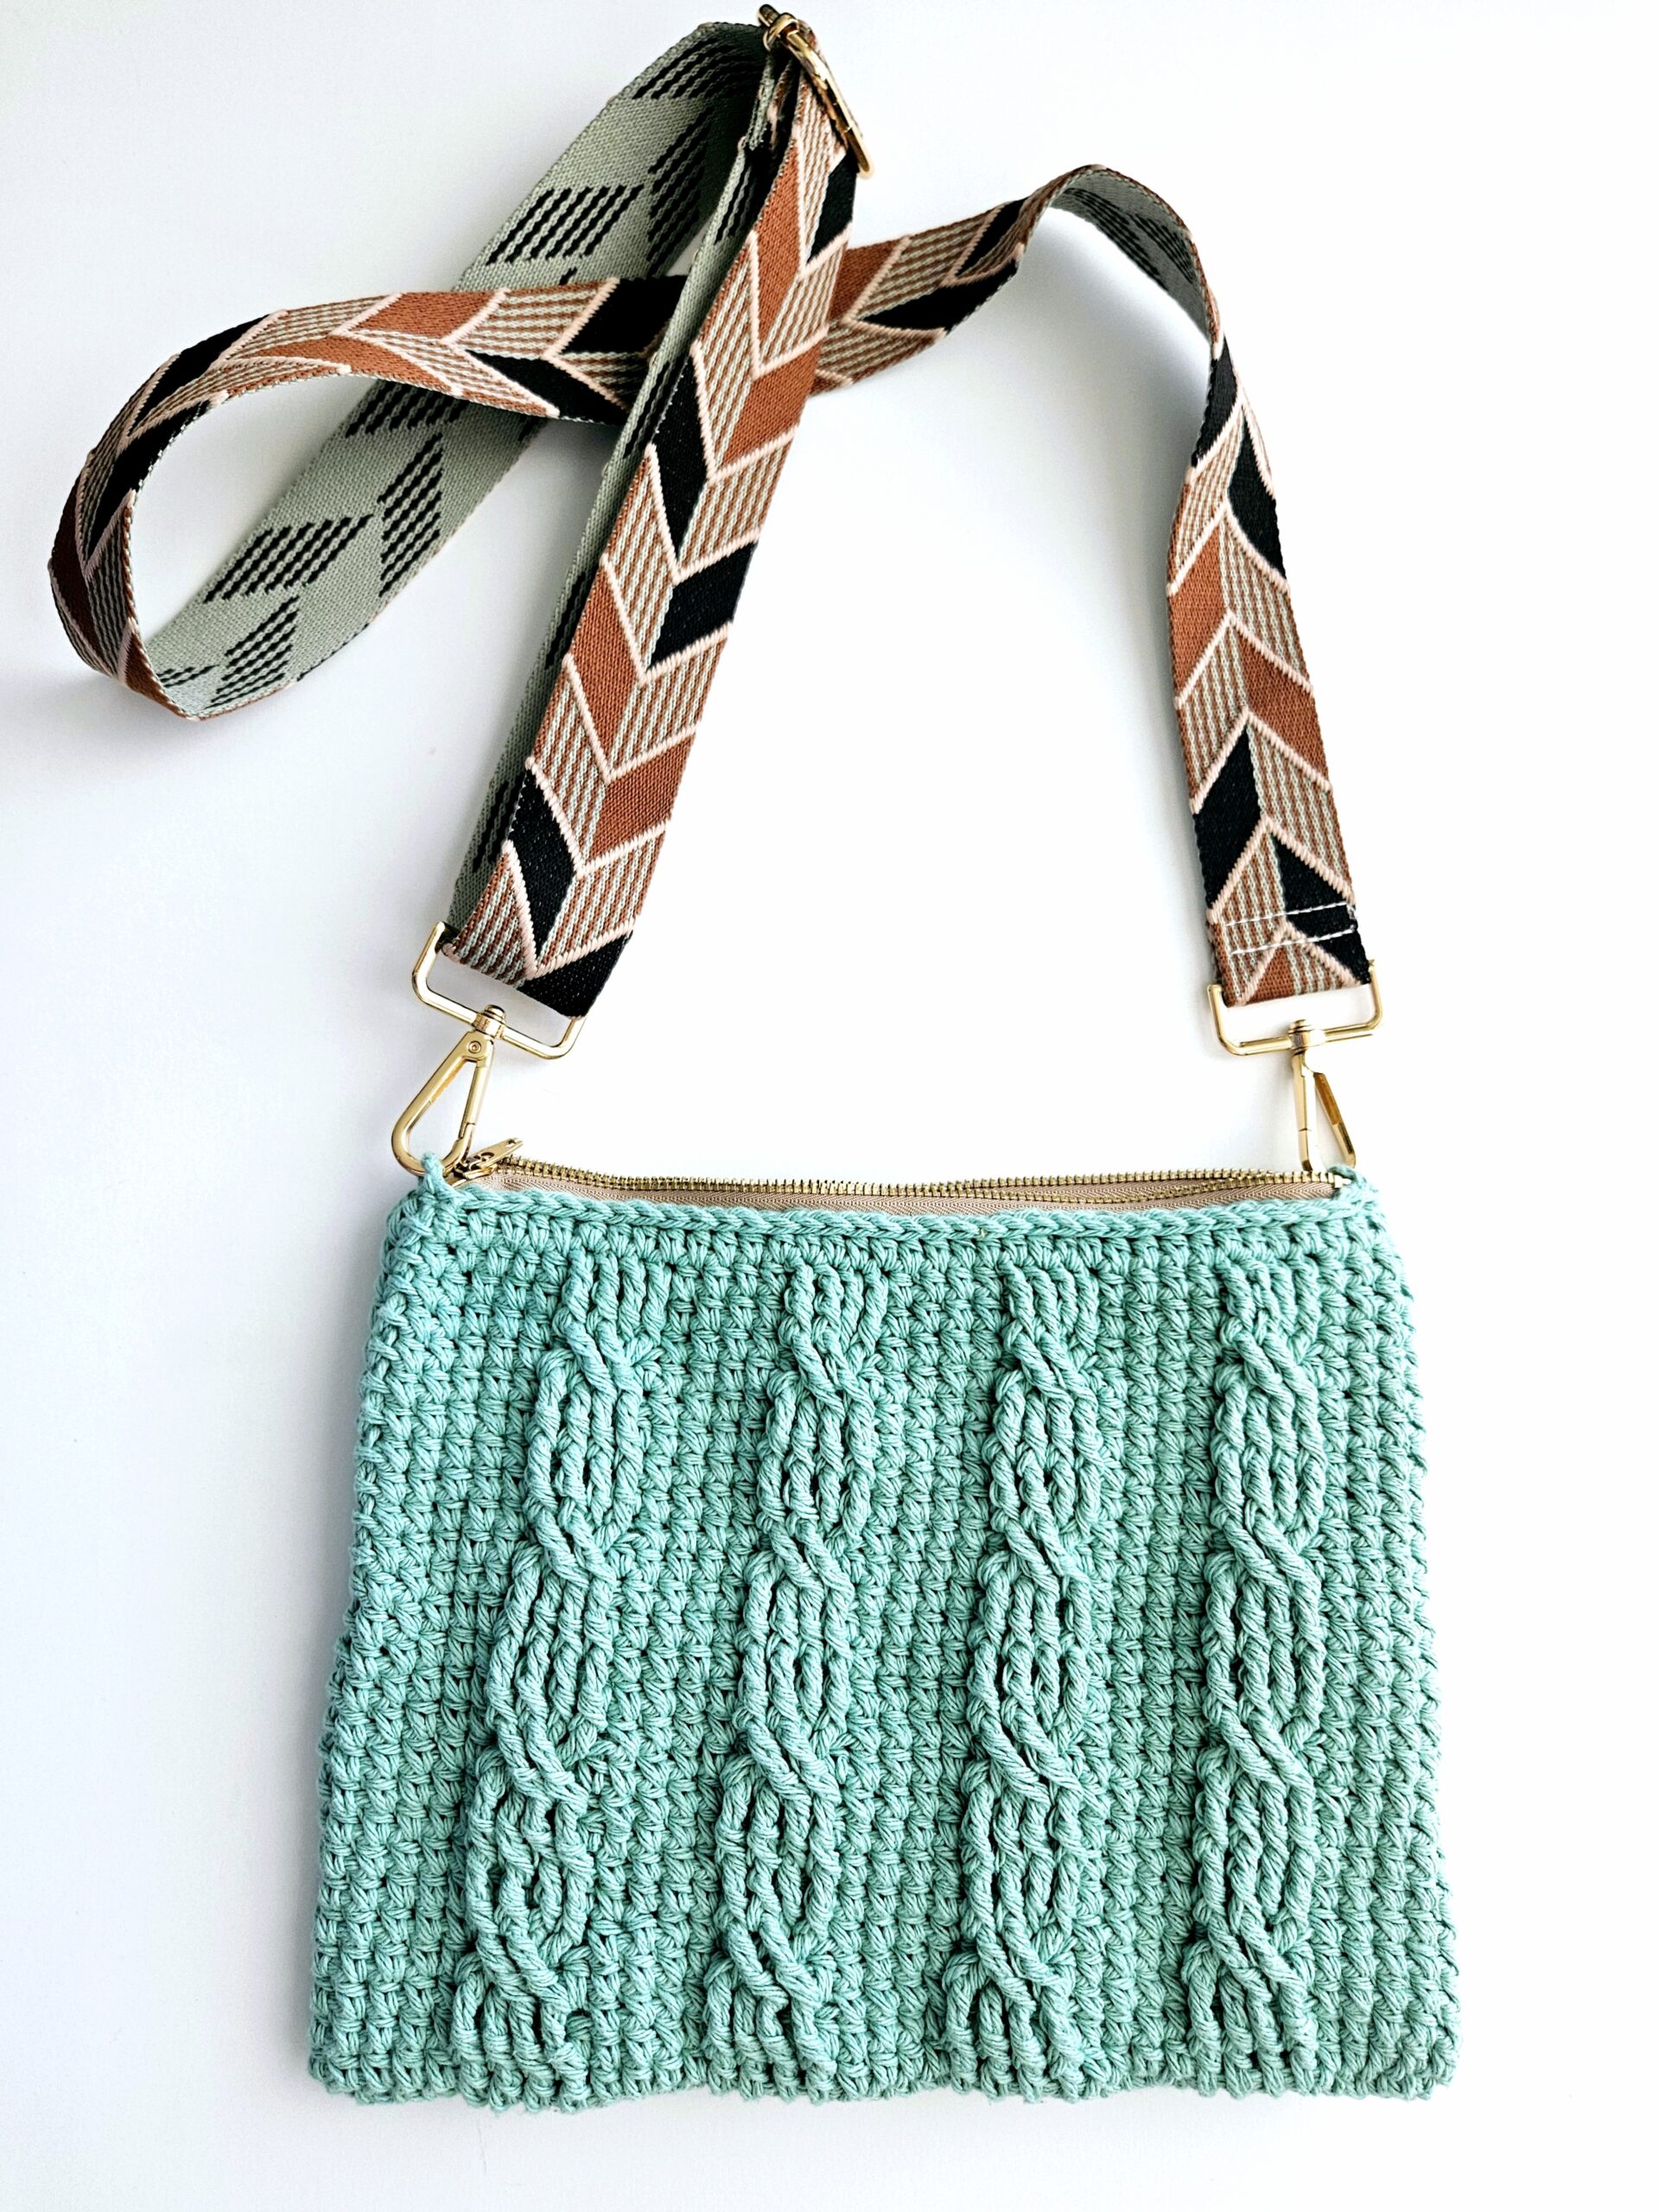 Latest stylish crochet bag designs||stylish handmade crochet bag  collection||crochet pattern ideas - YouTube | Crochet bag, Shoulder bags  pattern, Crochet handbags